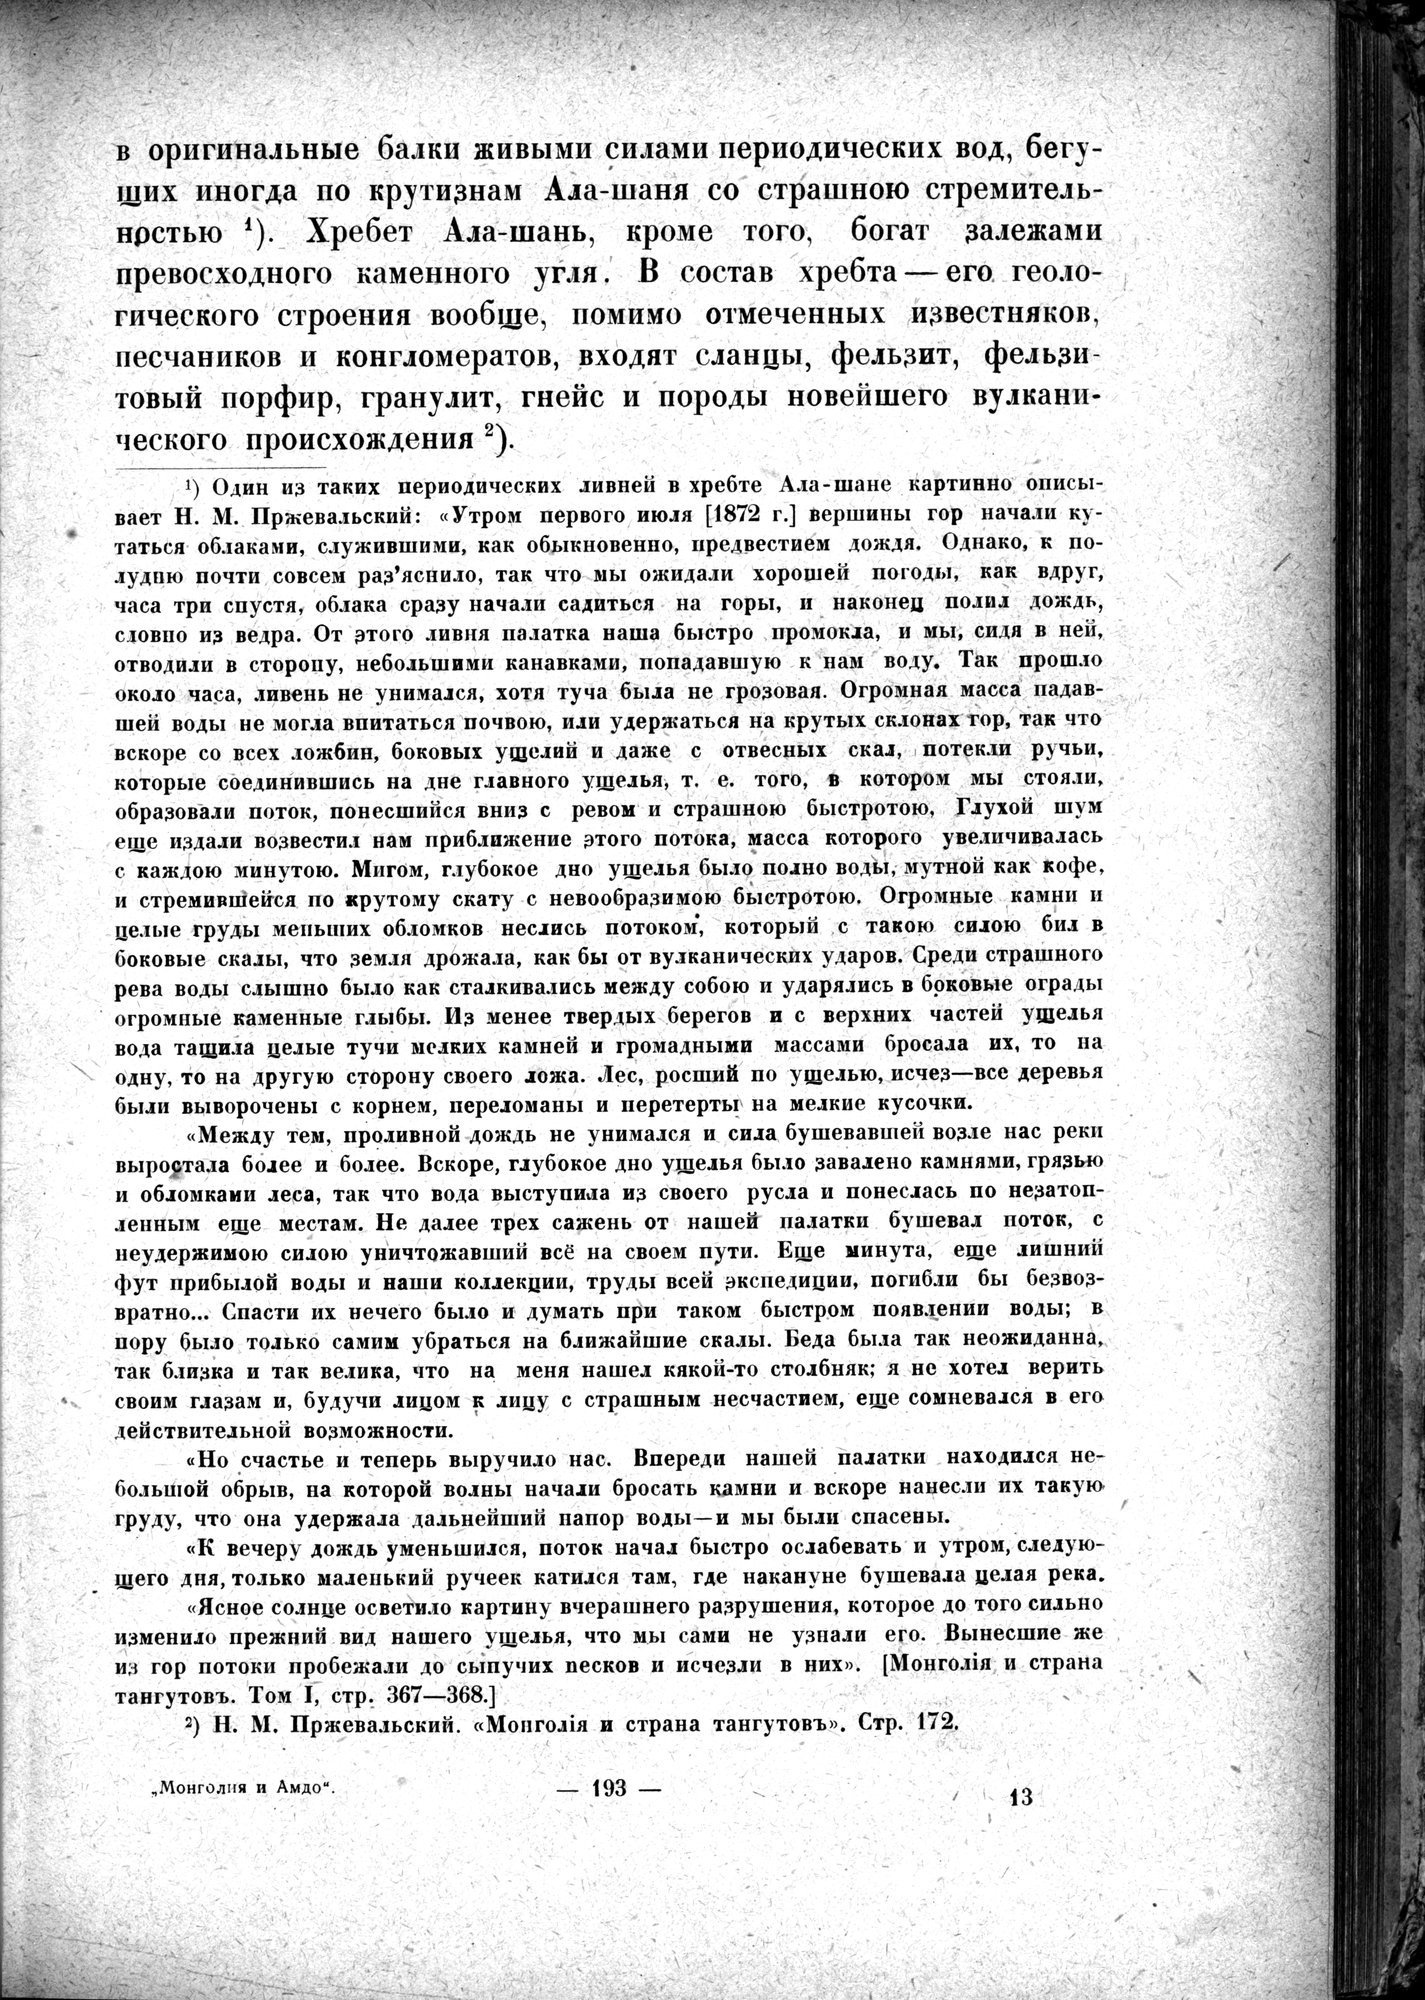 Mongoliya i Amdo i mertby gorod Khara-Khoto : vol.1 / Page 231 (Grayscale High Resolution Image)